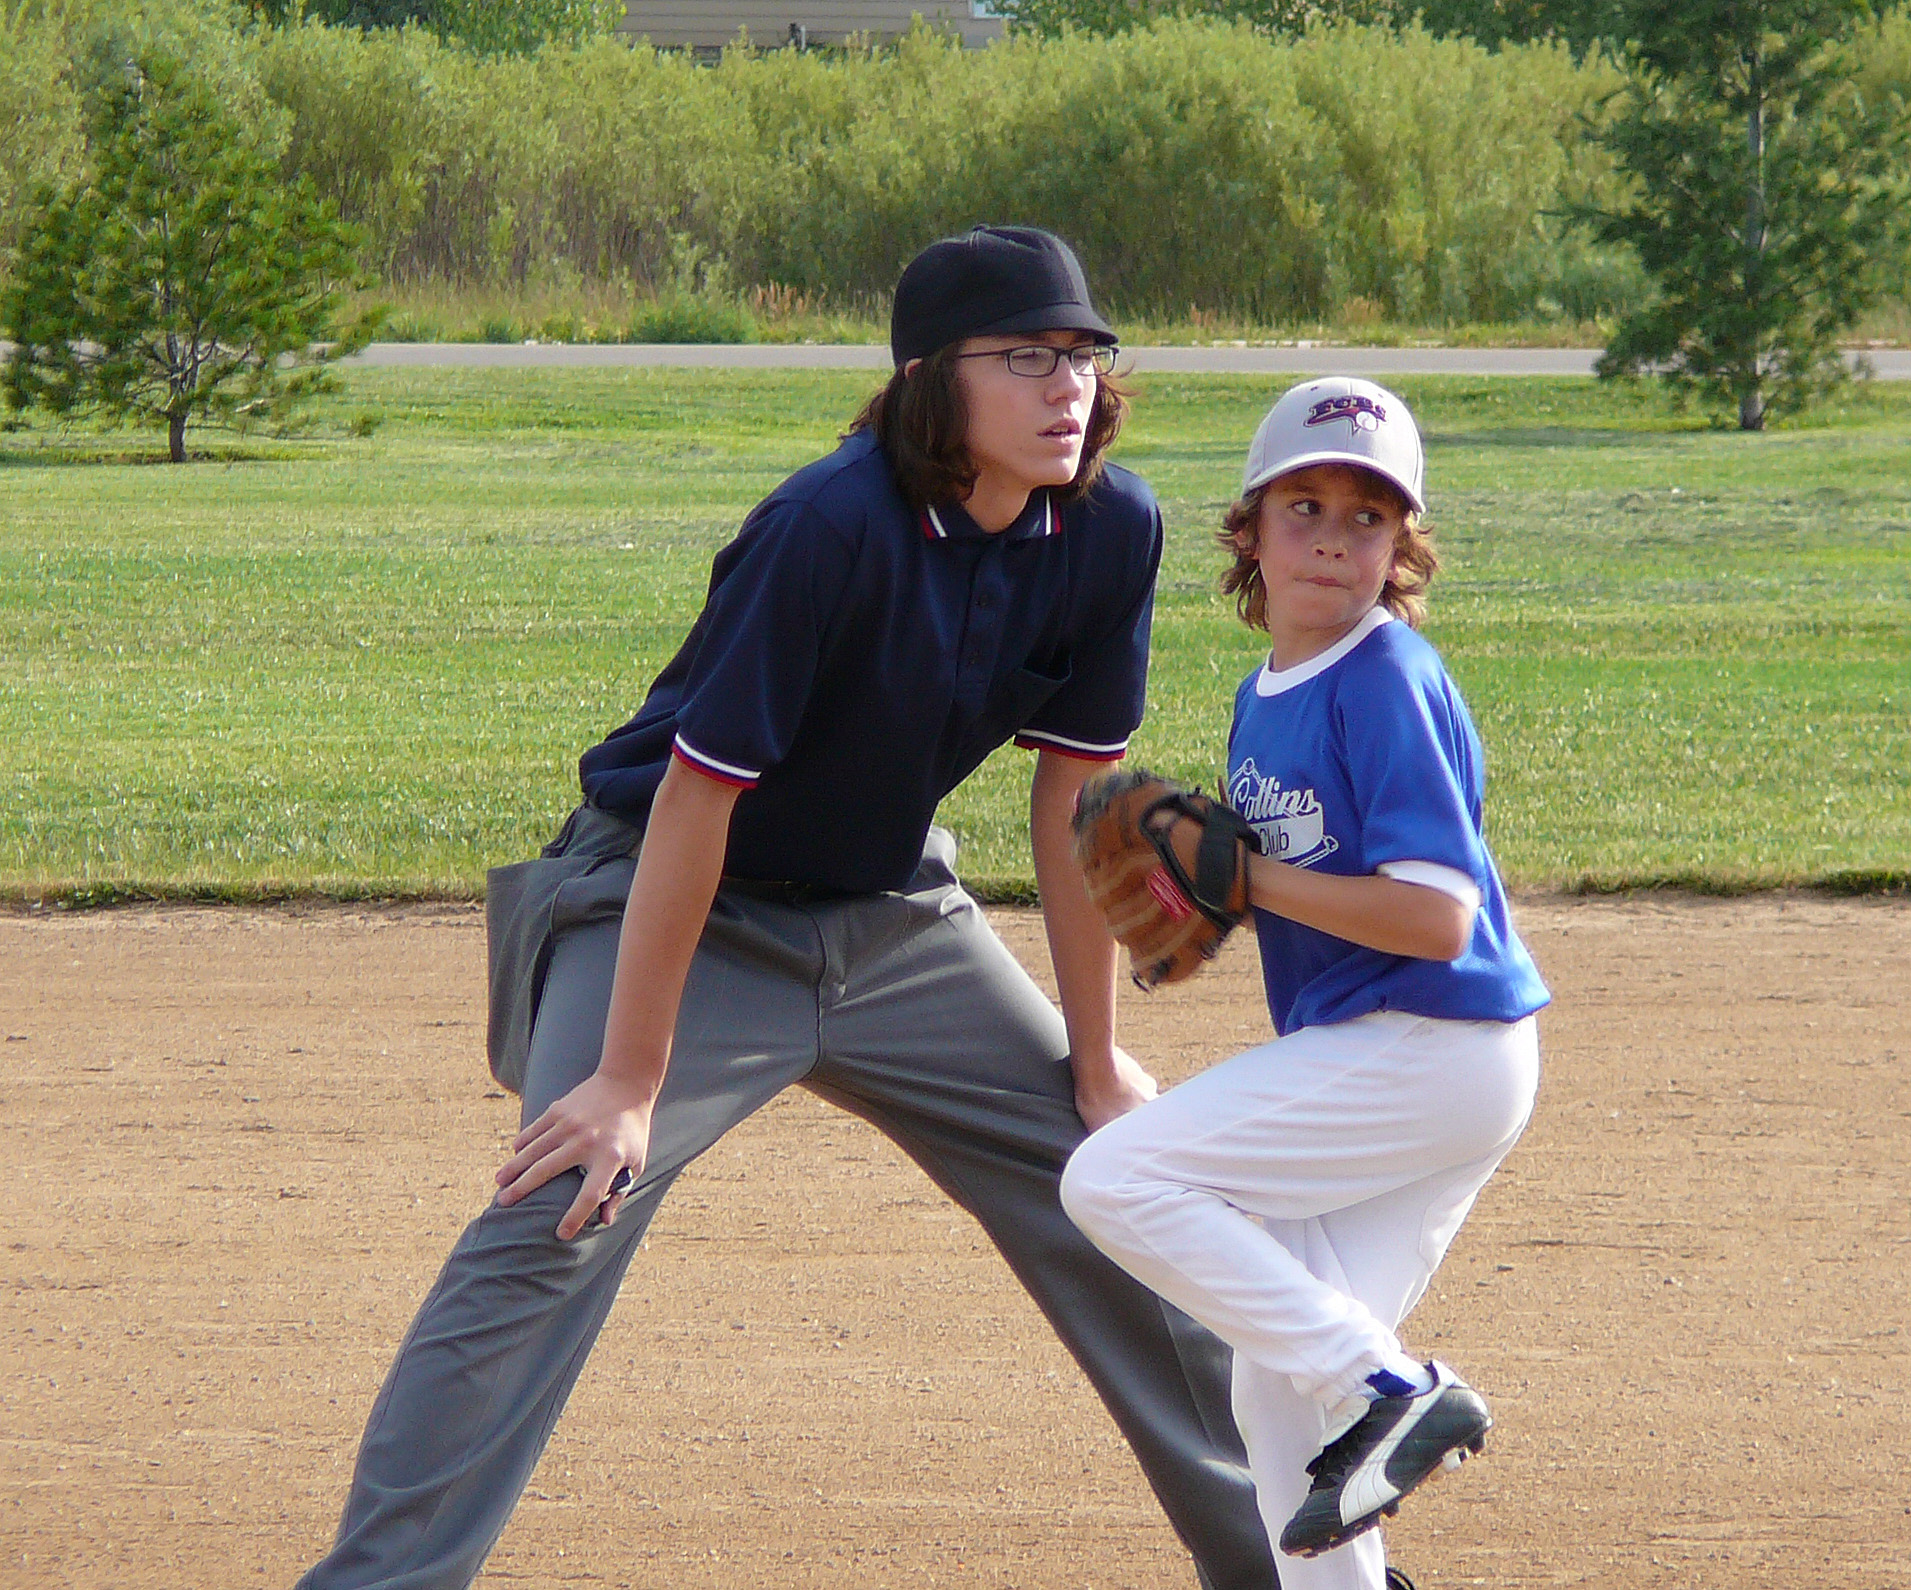 two children play baseball on a dirt field